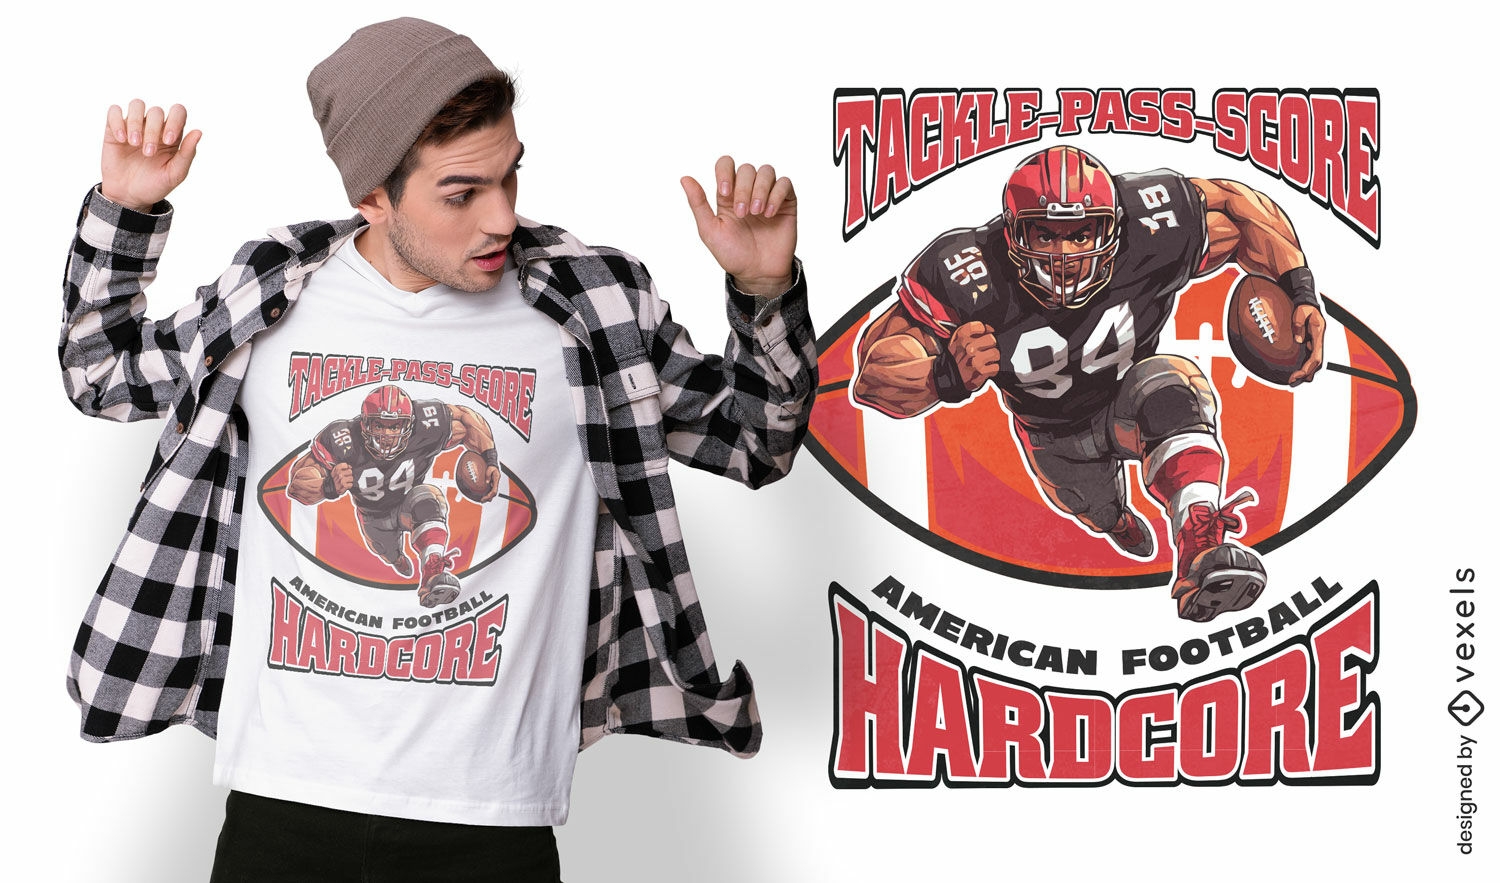 American football hardcore t-shirt design